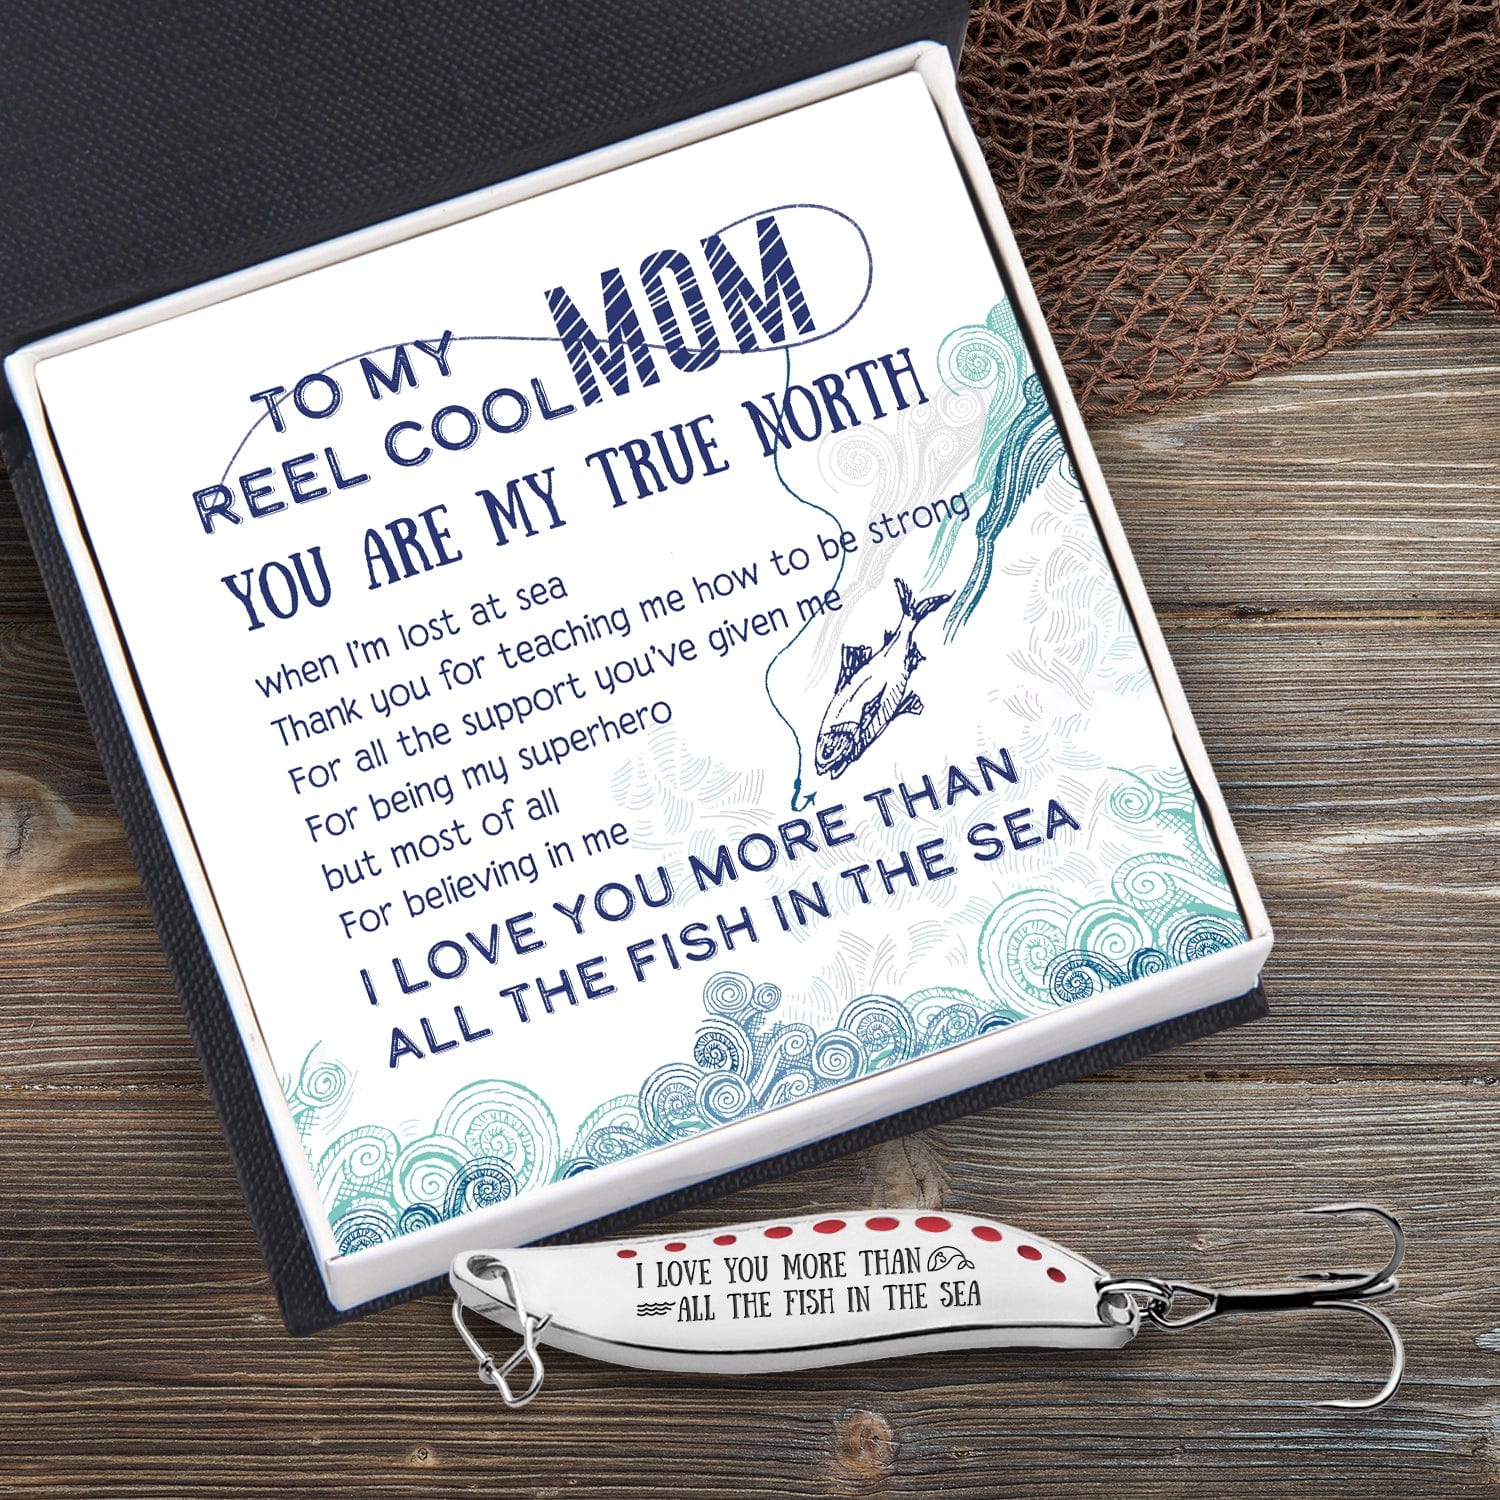 Fishing Spoon Lure - Fishing - To My Mom - You're My True North - Gfaa19002